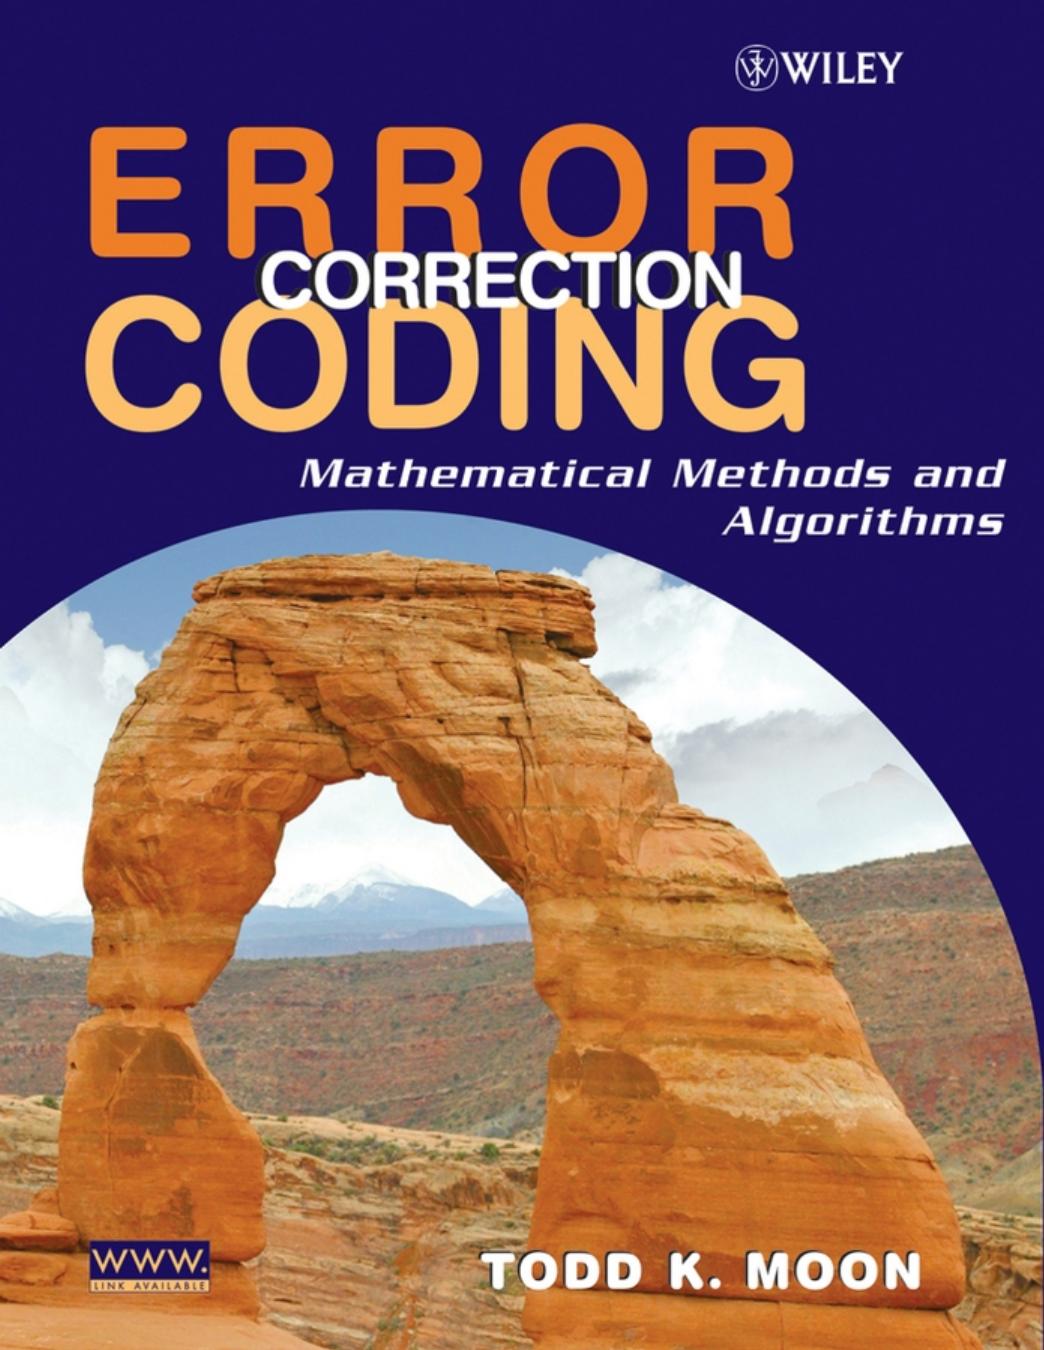 Error Correction Coding by Todd K. Moon